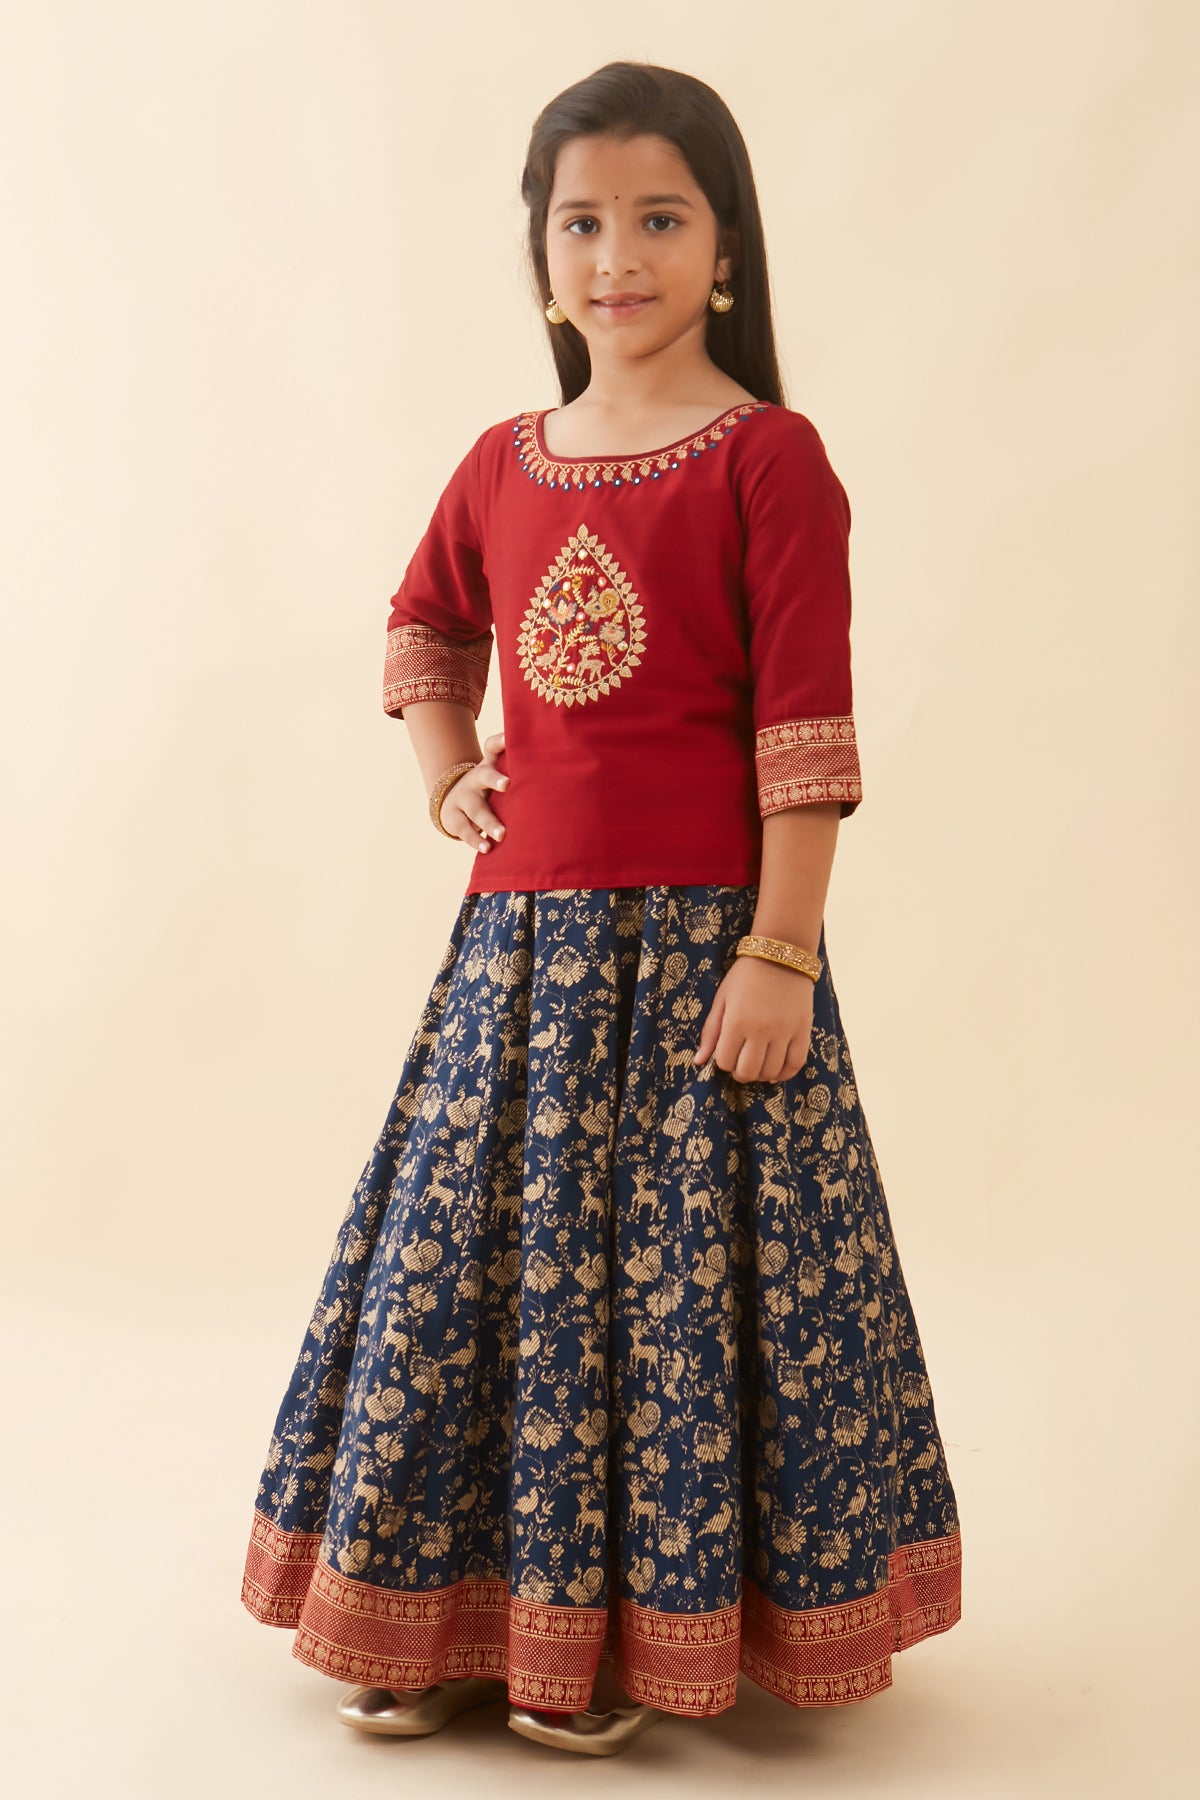 Peacock & Deer Embroidered & Printed Kids Skirt Set - Red & Navy